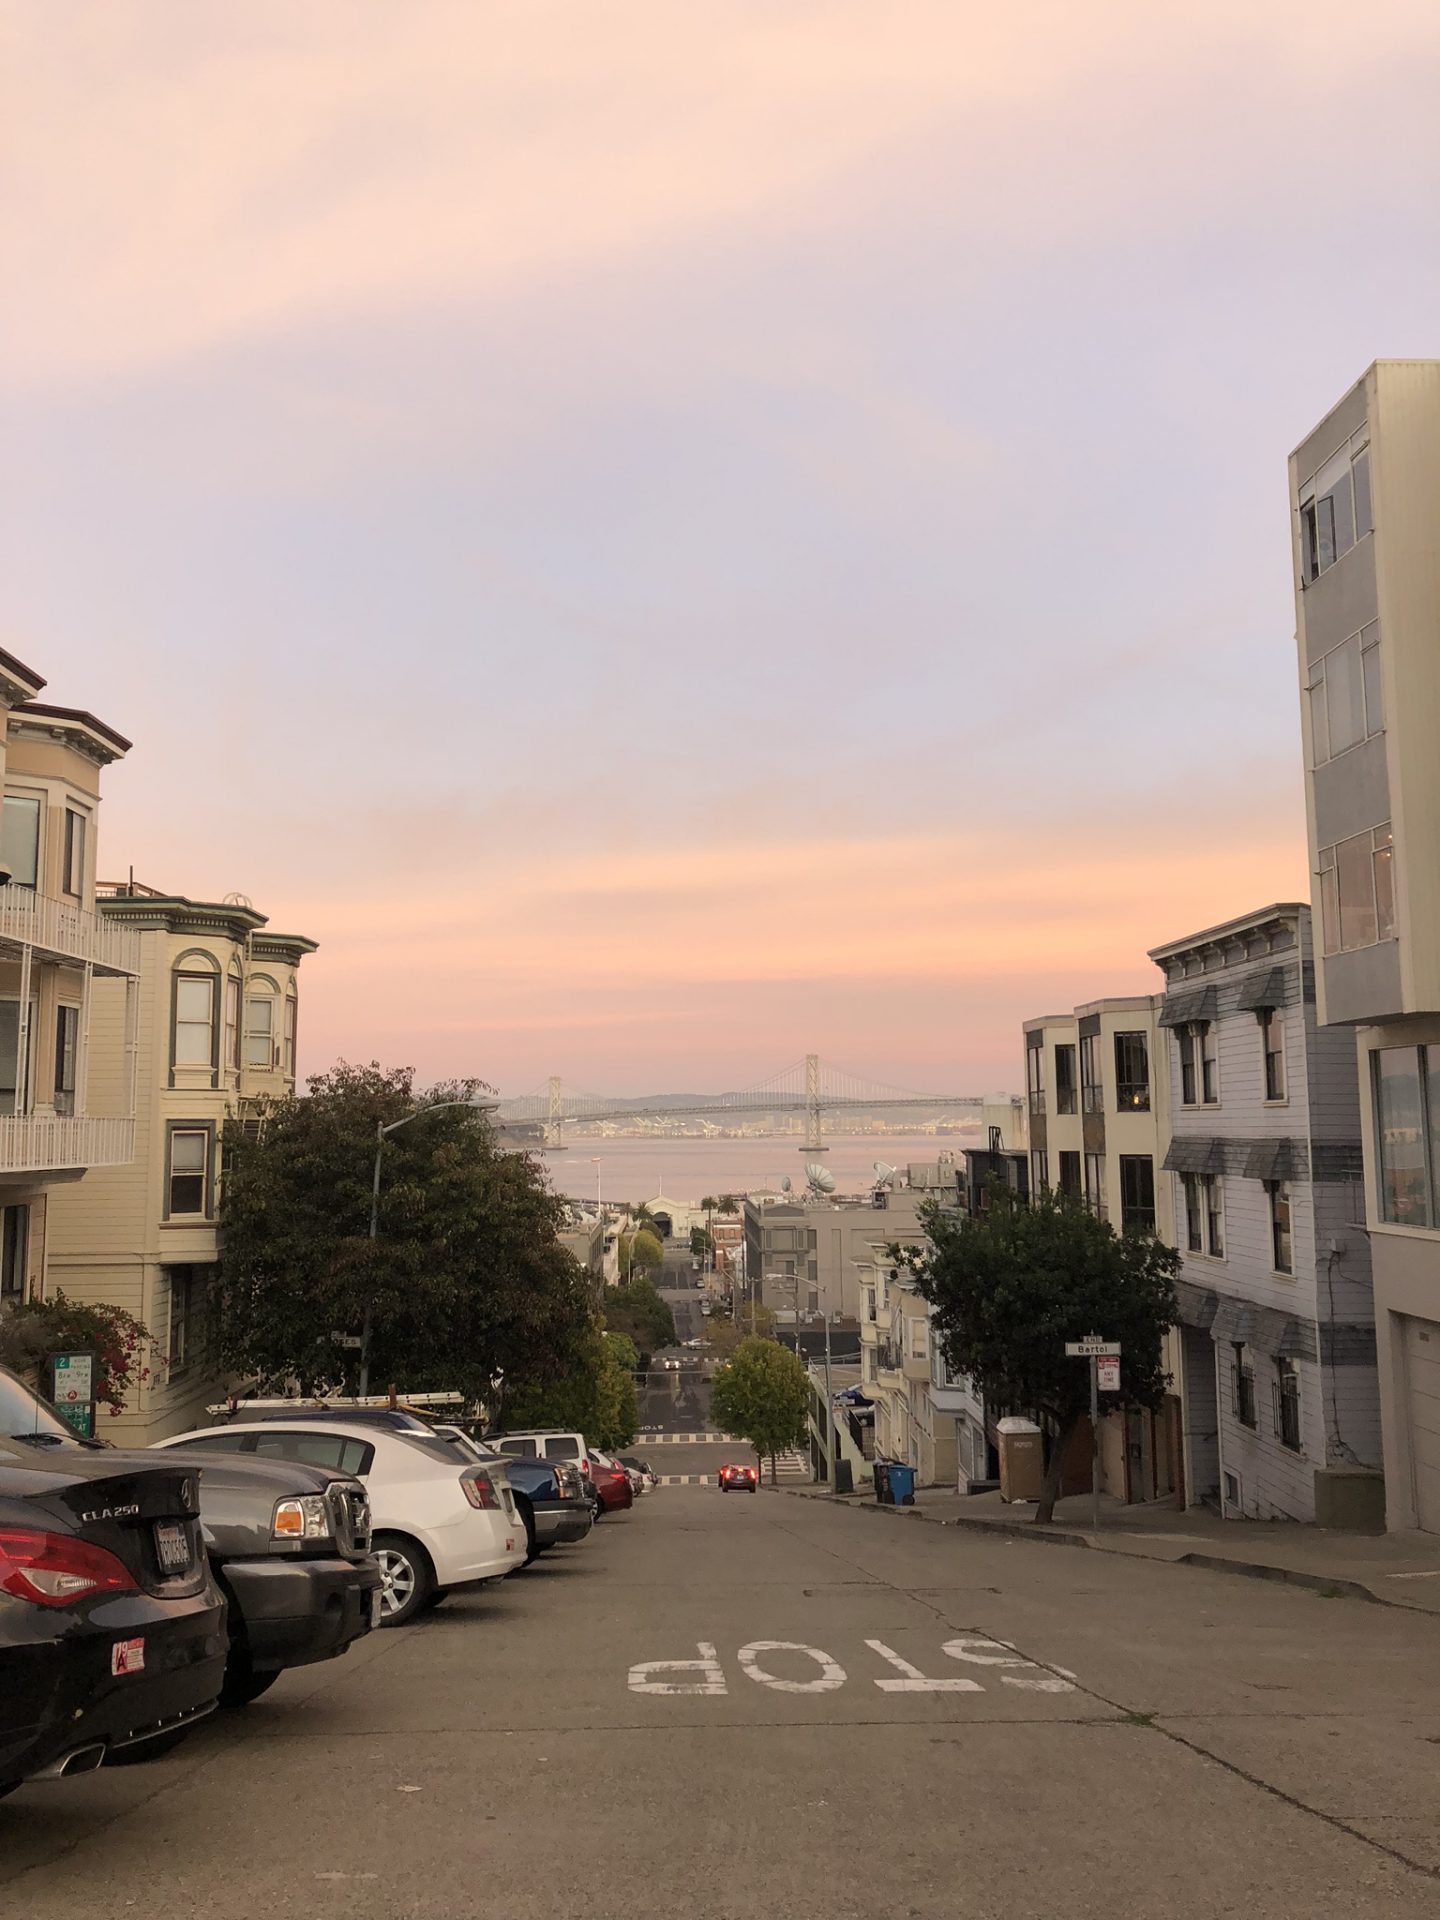 Sunsets across San Francisco Bay